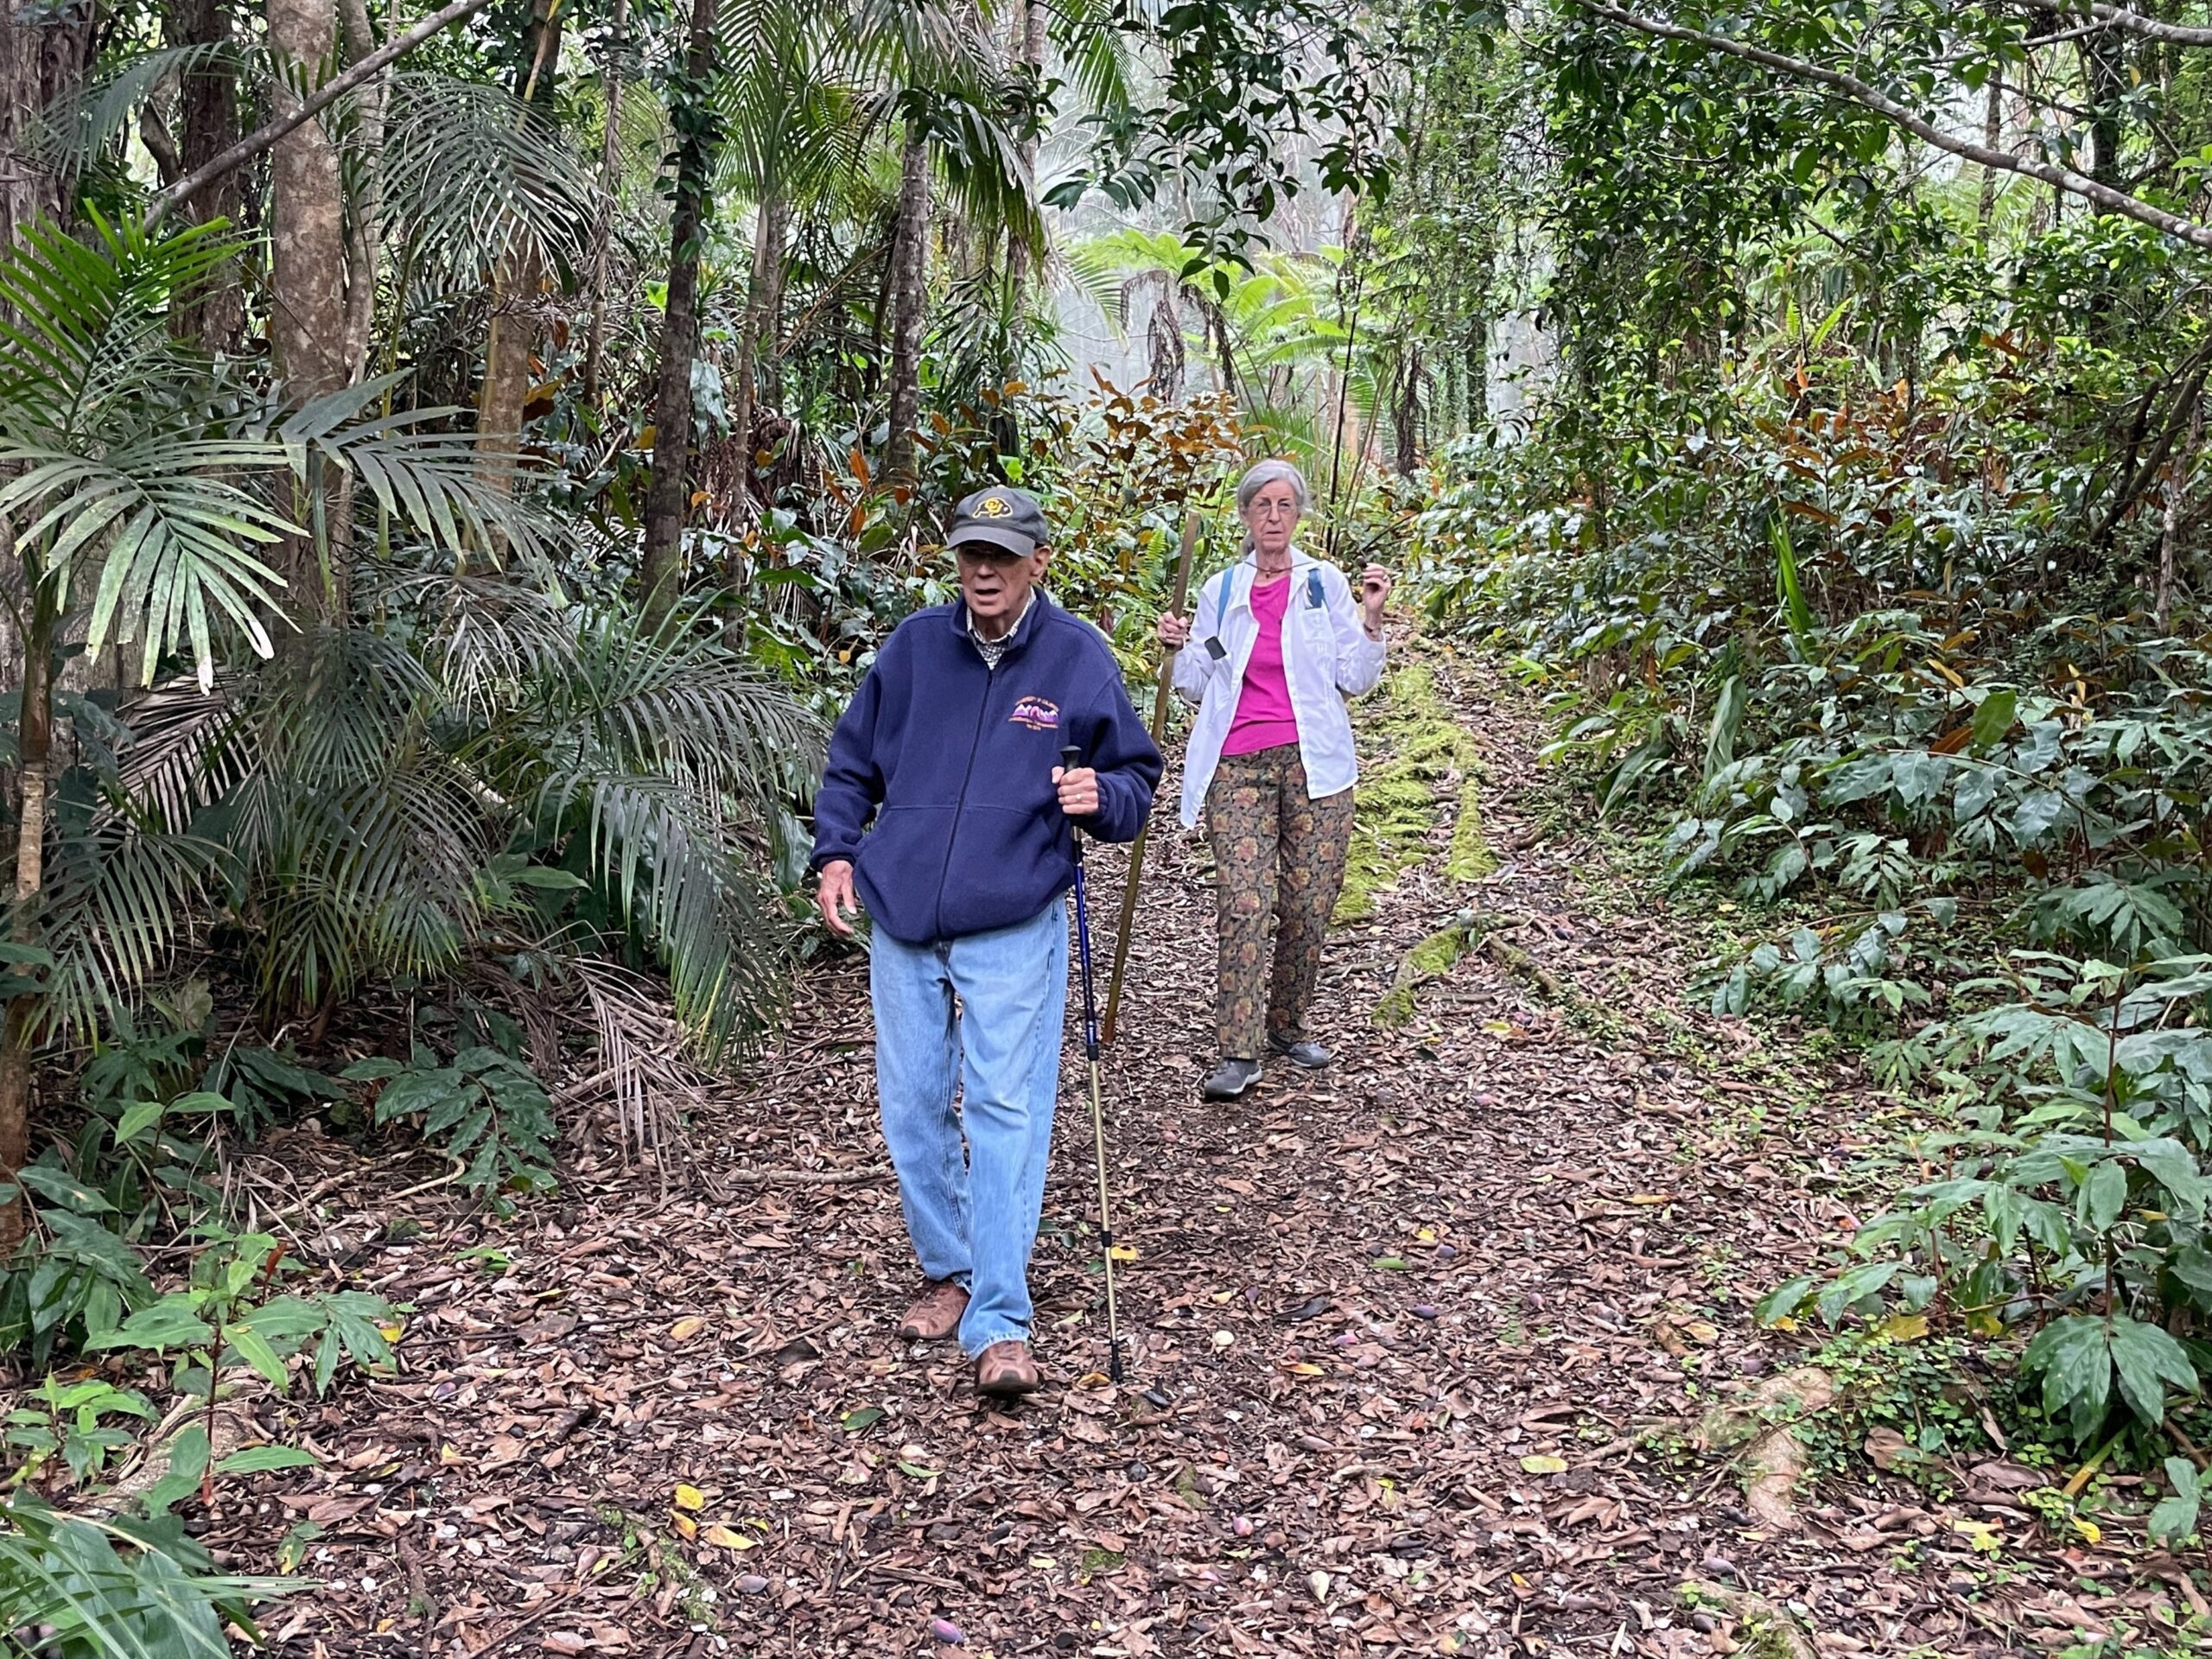 An elderly couple taking a walk through a cloud forest.